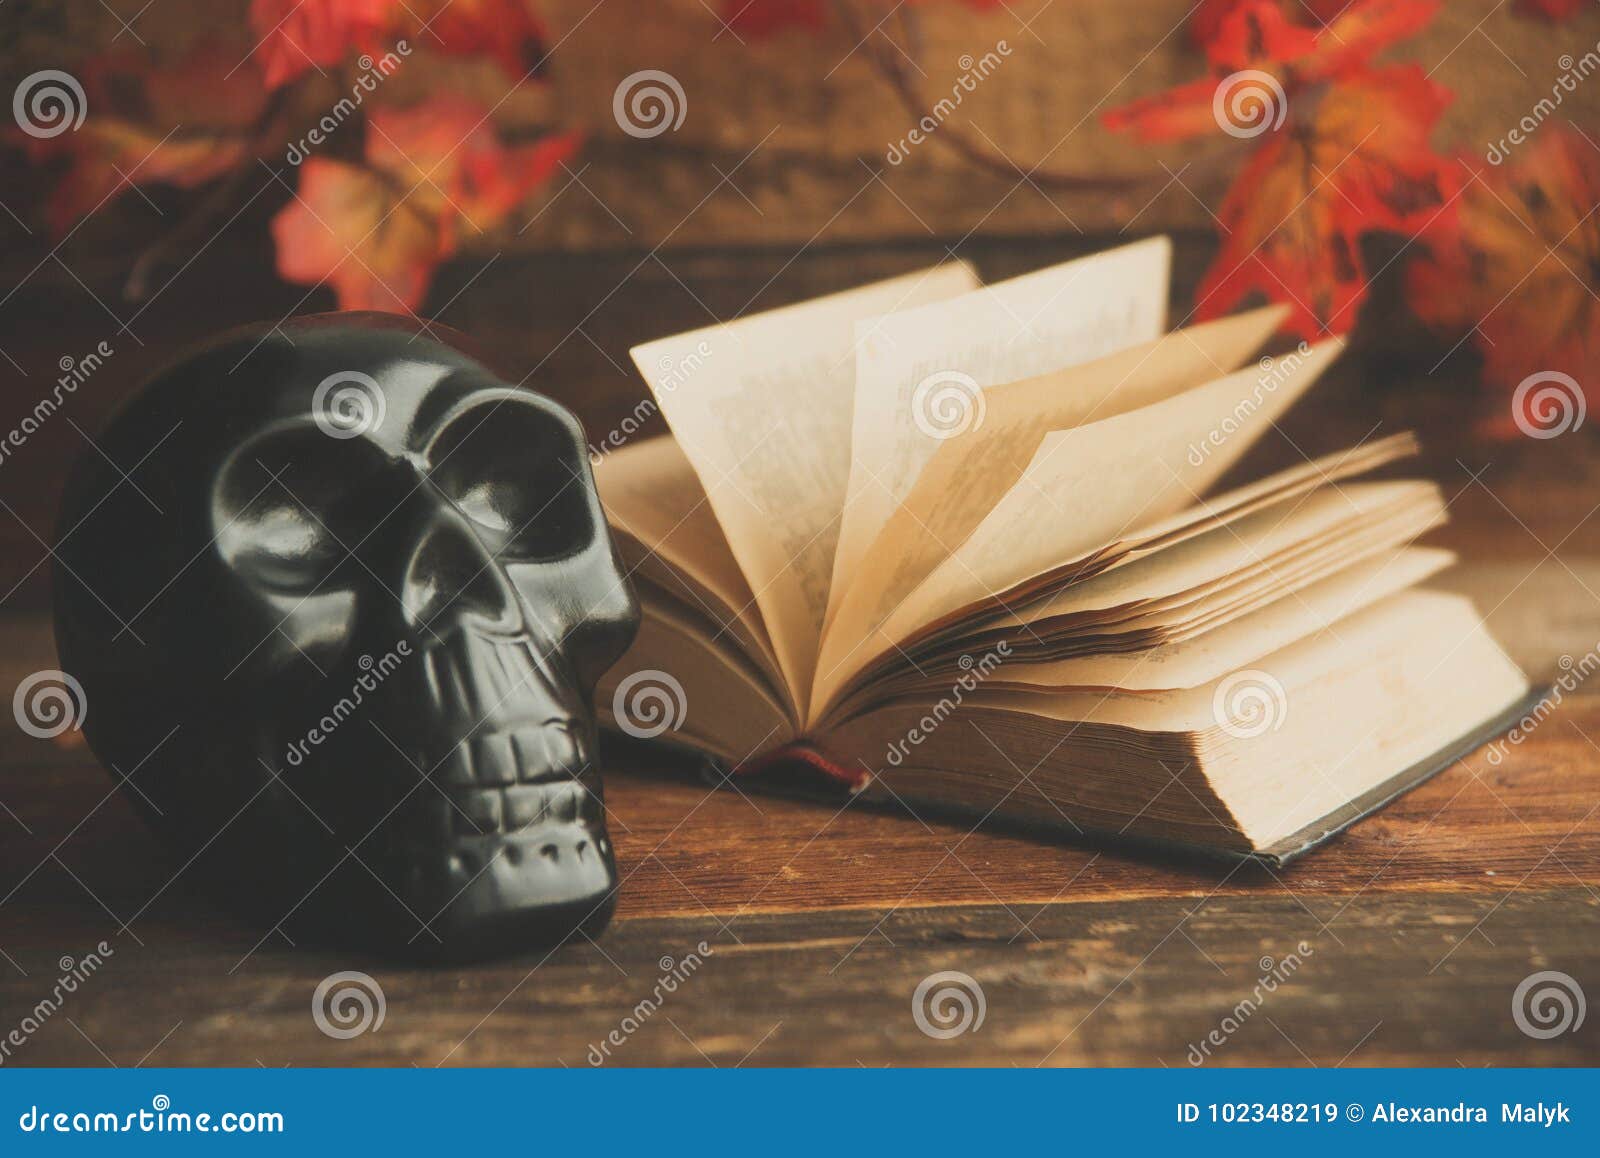 Still Life Art Photography On Human Skull Skeleton With Book Omn